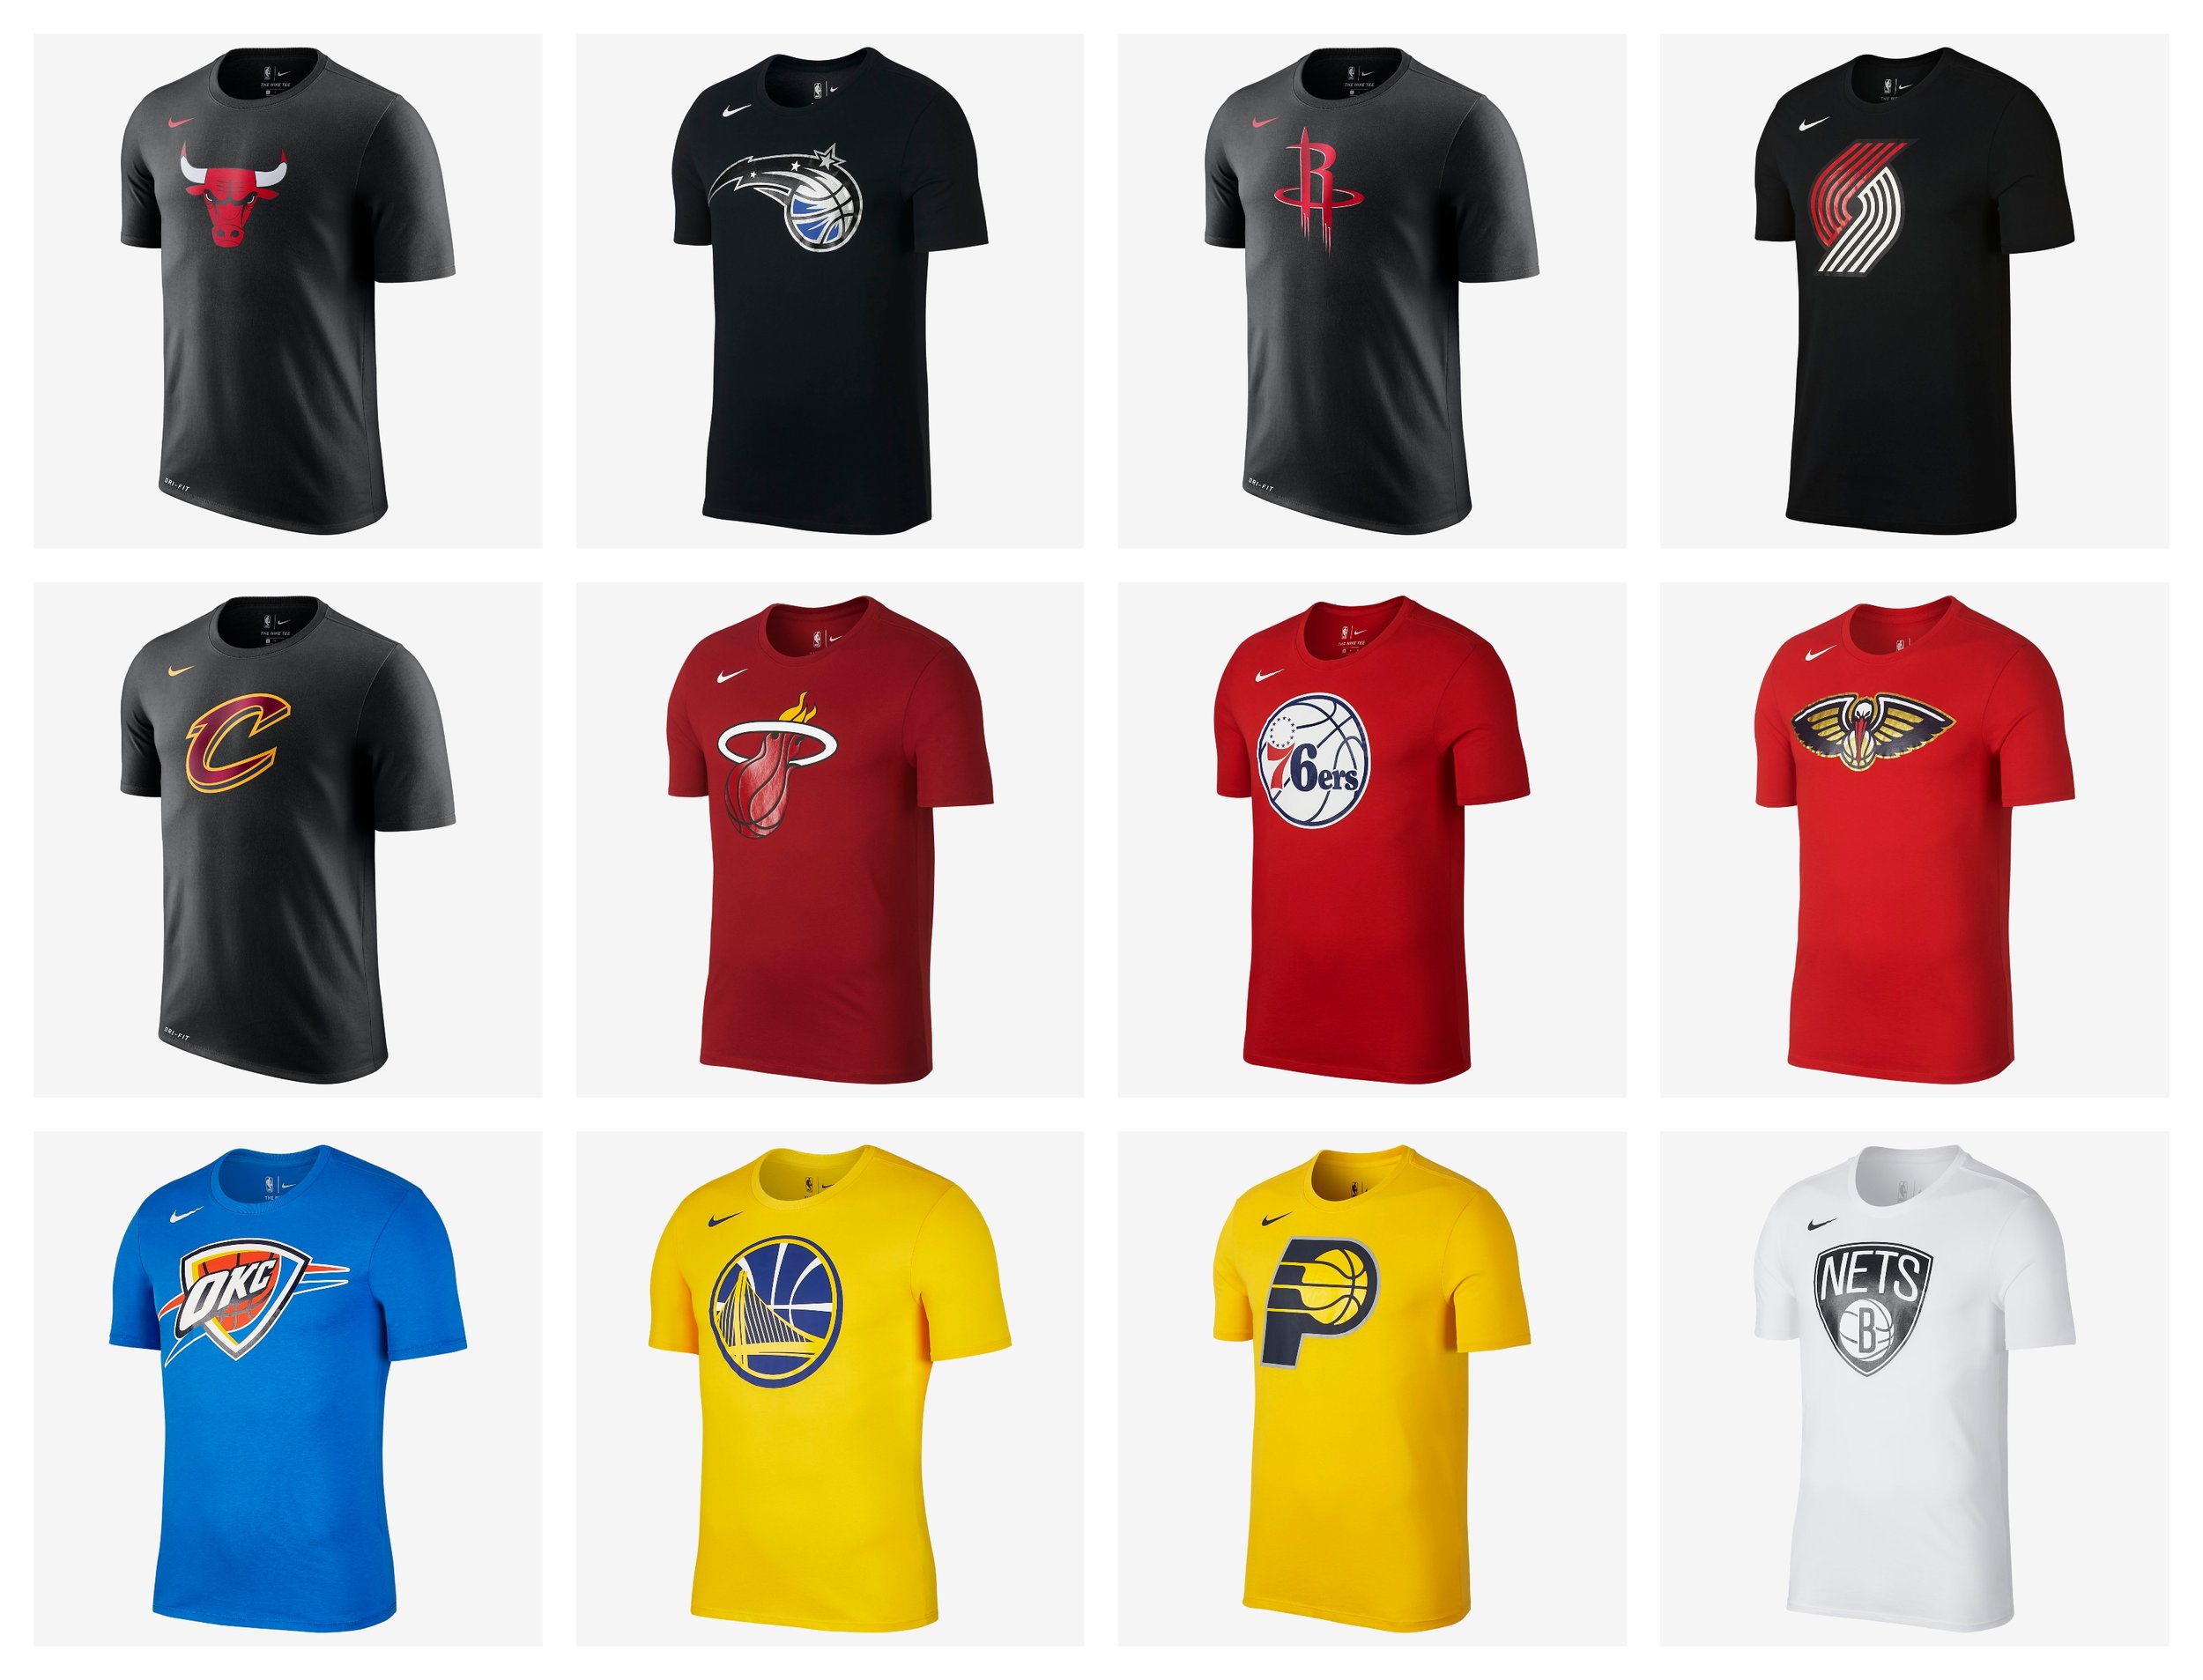 OFF Nike NBA Dry Logo T-shirts 